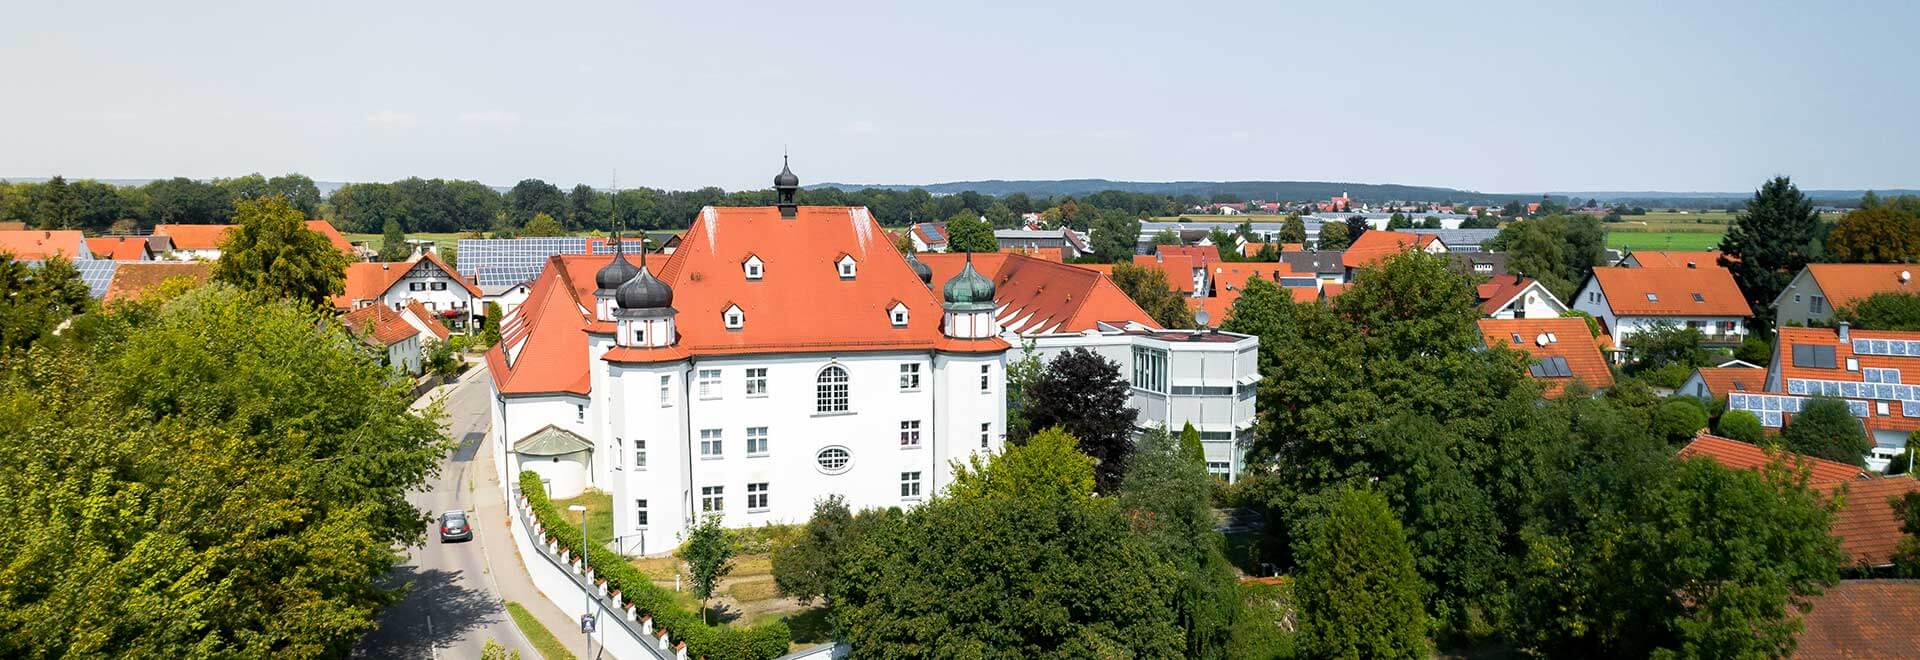 Schloss Fellheim Seniorenheim Pflegeheim Altenheim